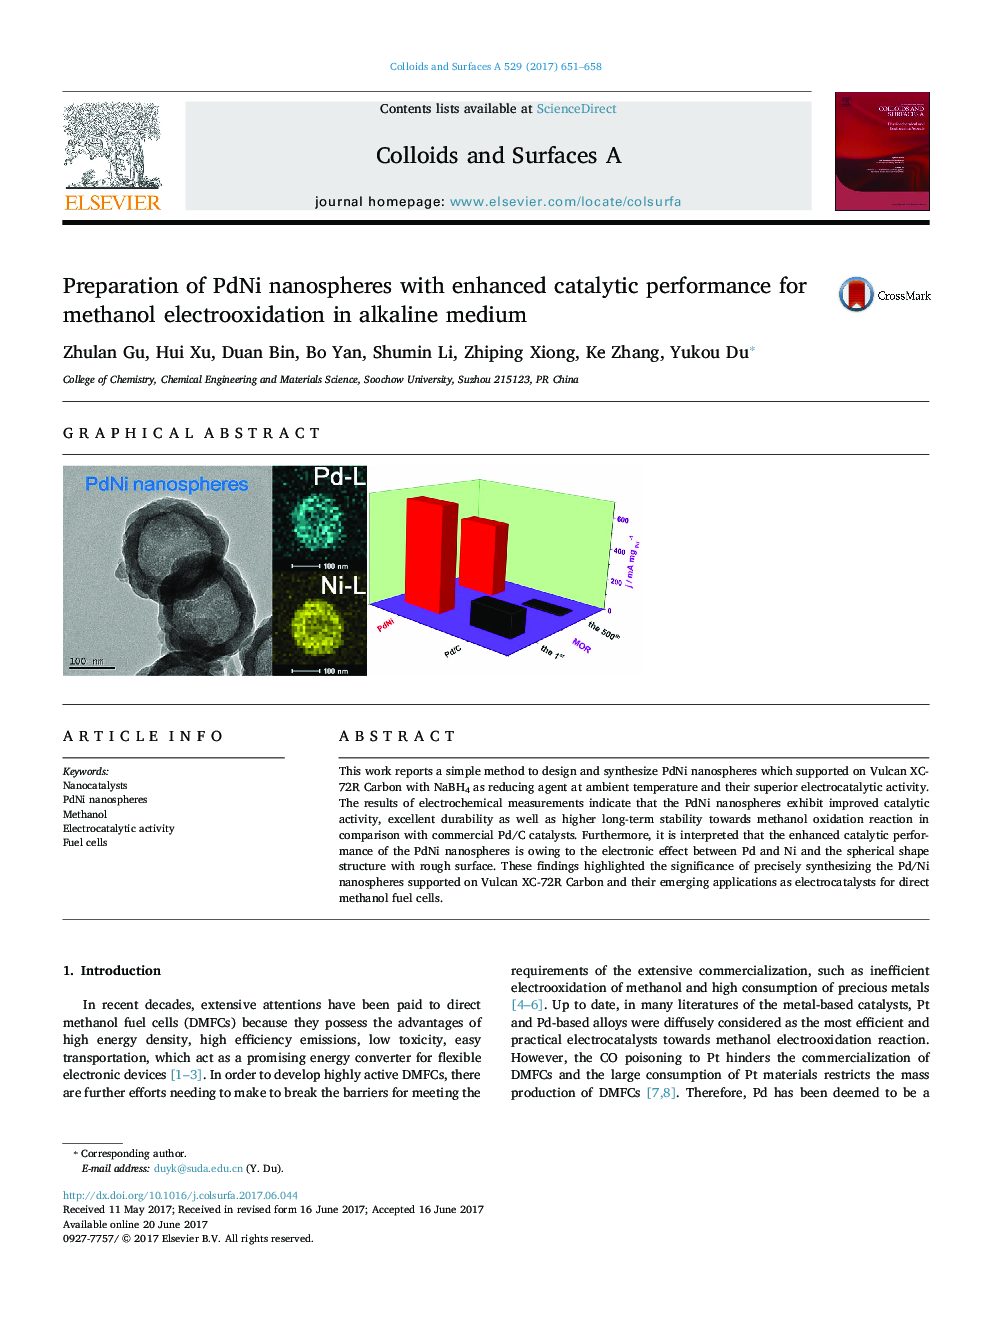 Preparation of PdNi nanospheres with enhanced catalytic performance for methanol electrooxidation in alkaline medium